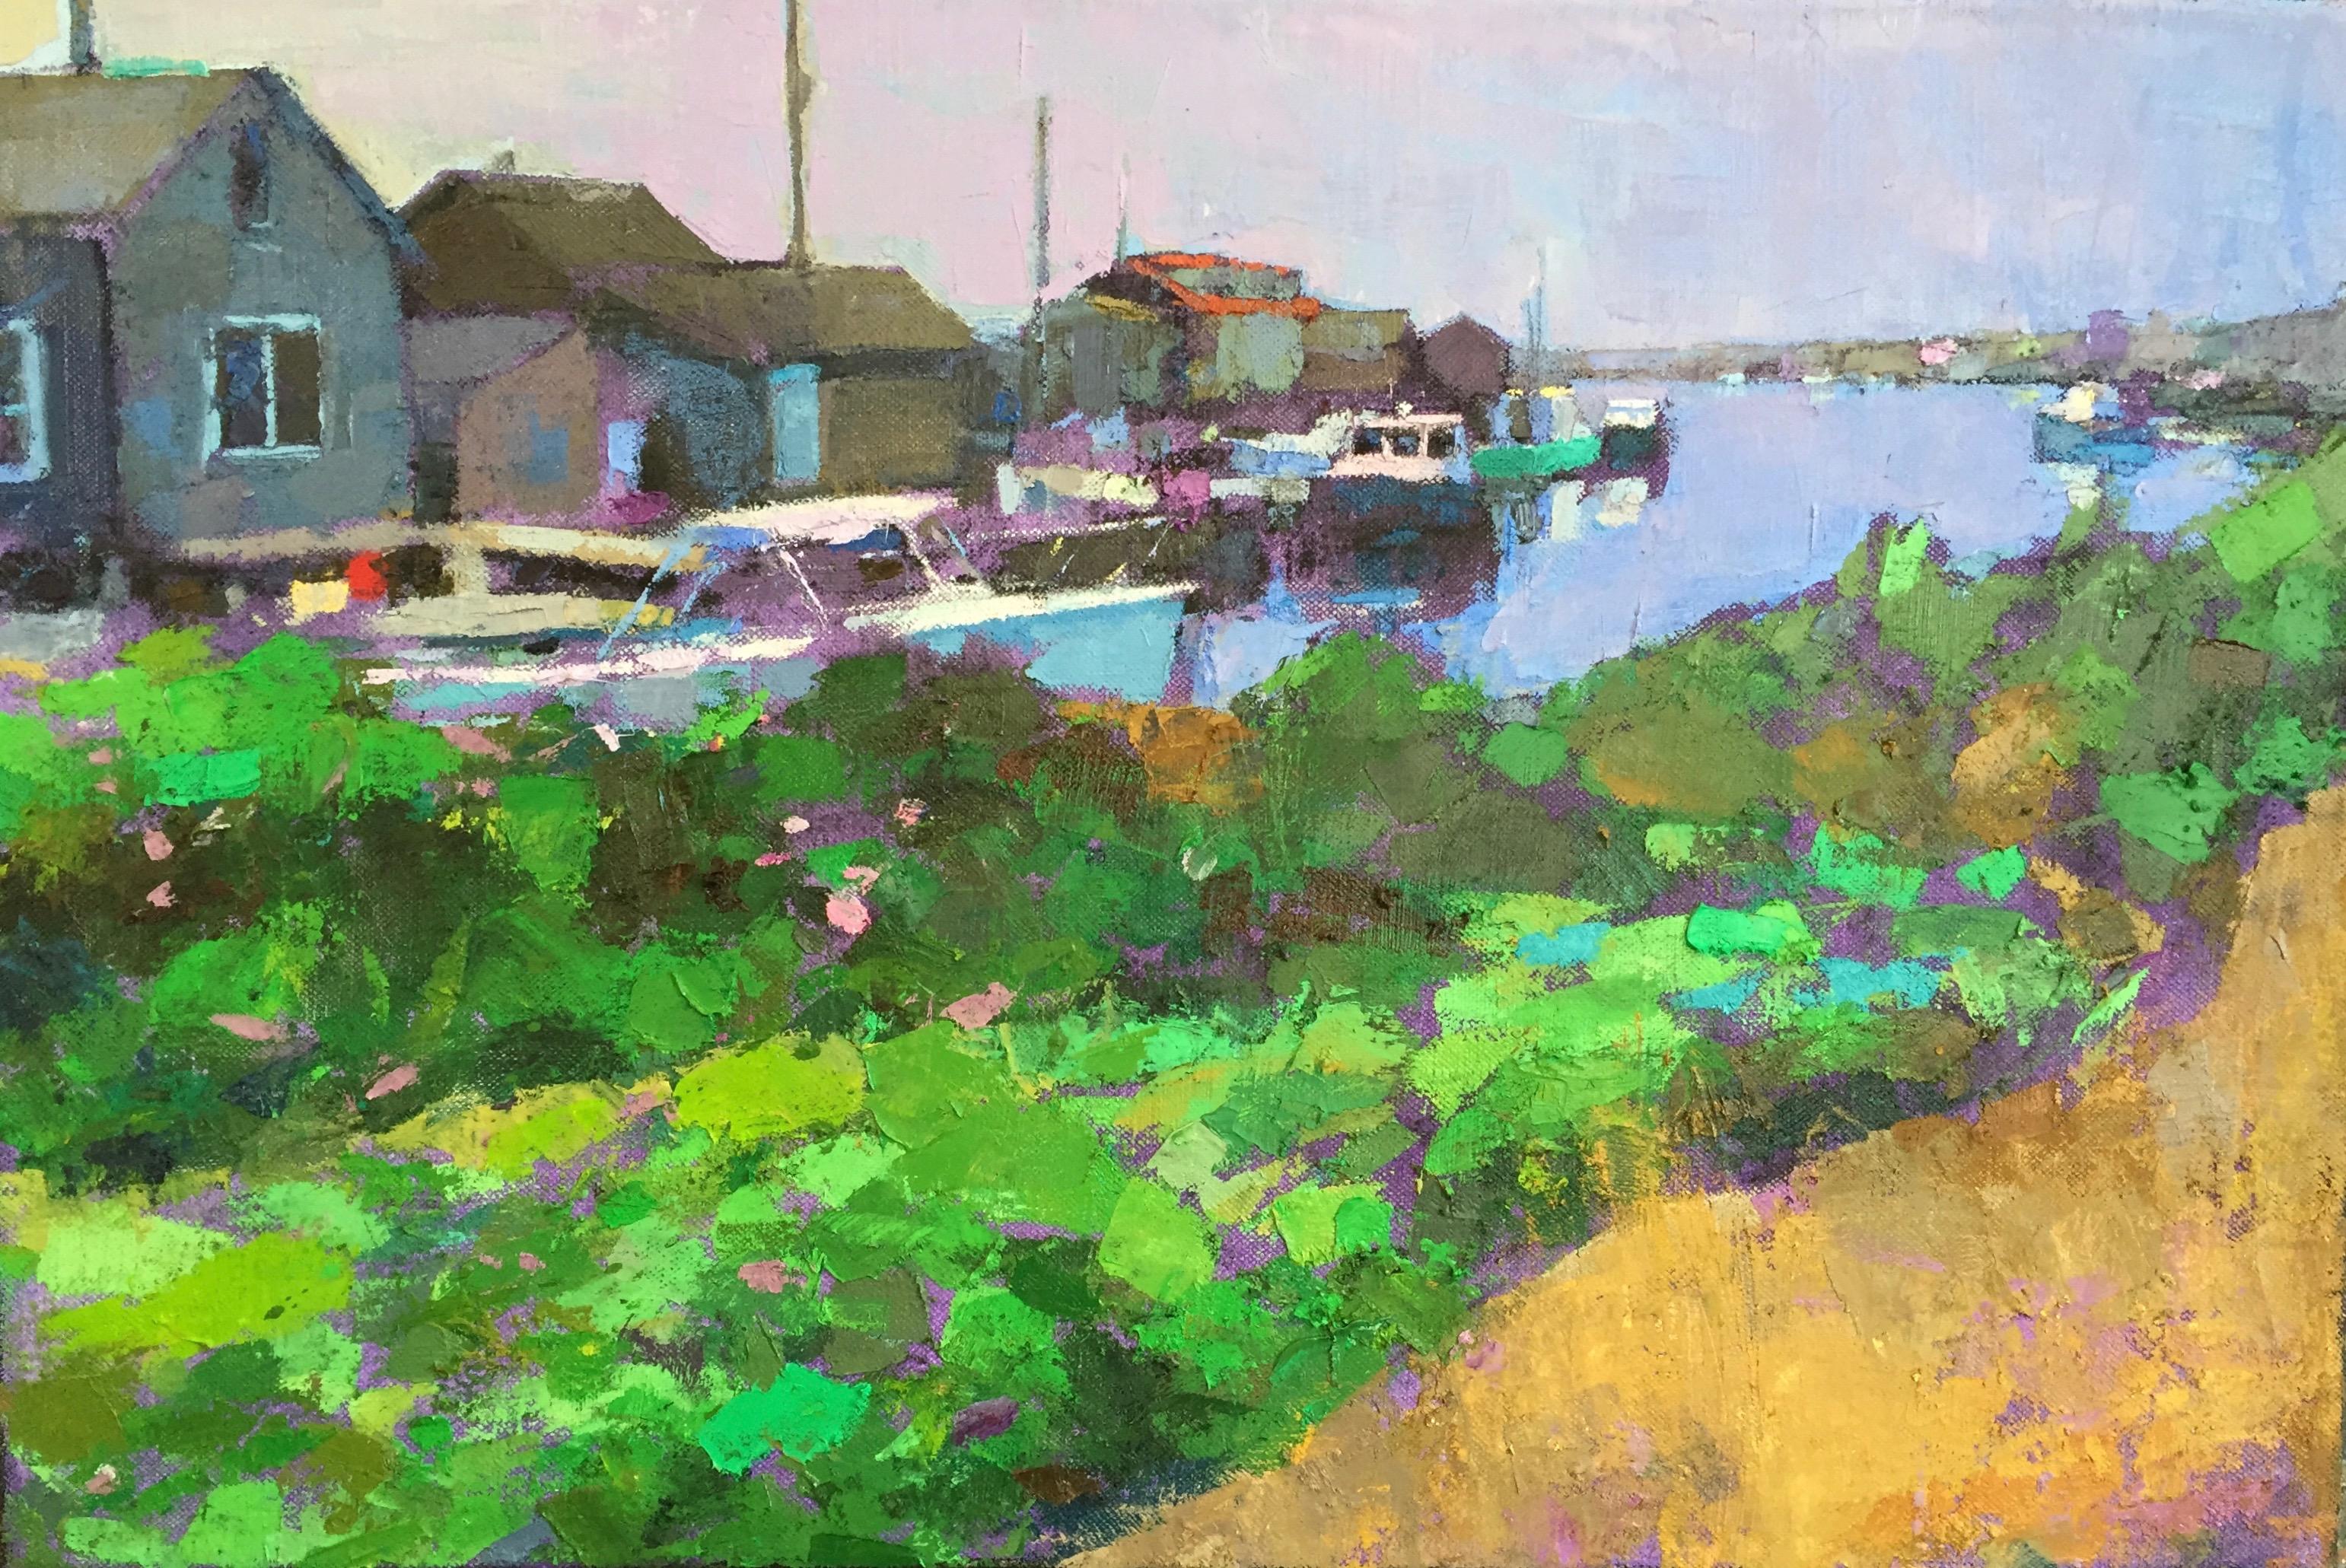 Larry Horowitz Landscape Painting - "Menemsha Docks" oil painting of green bushes in front of Martha's Vineyard Dock